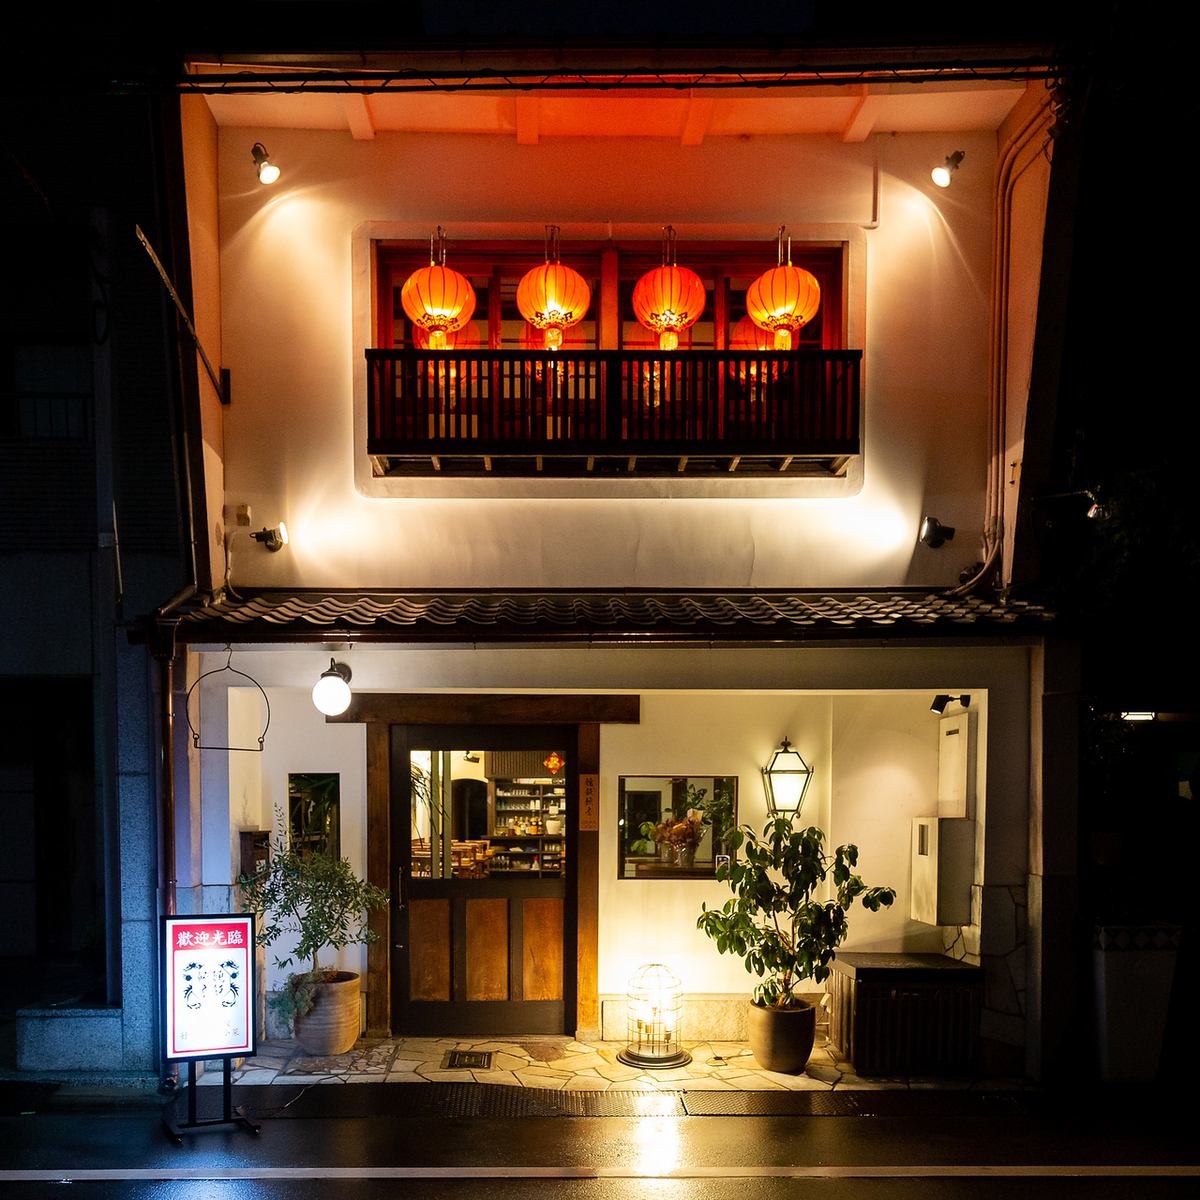 A gyoza specialty restaurant run by the owner chef of the popular restaurant "Ichinofunairi"